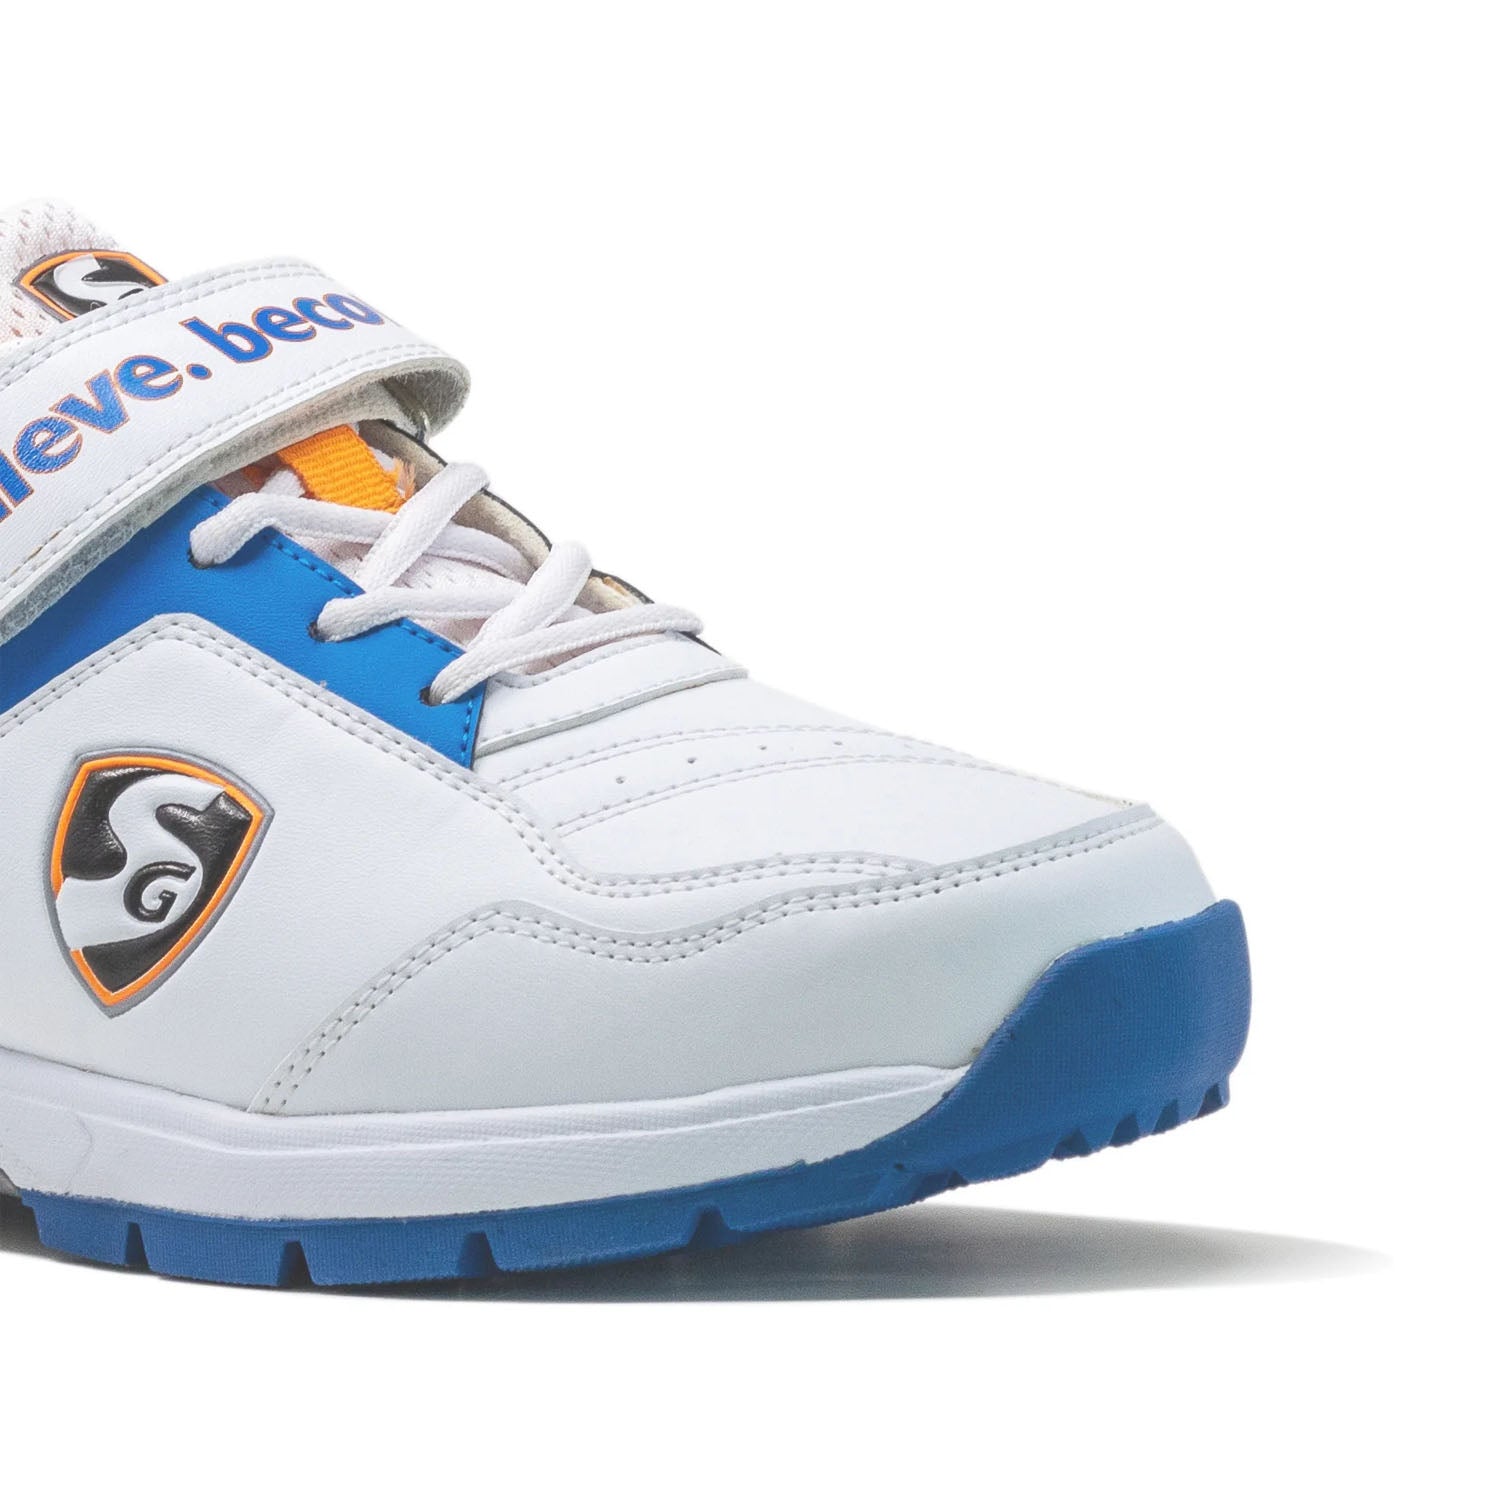 SG Century 6.0 Rubber Spikes Cricket Shoes - Best Price online Prokicksports.com